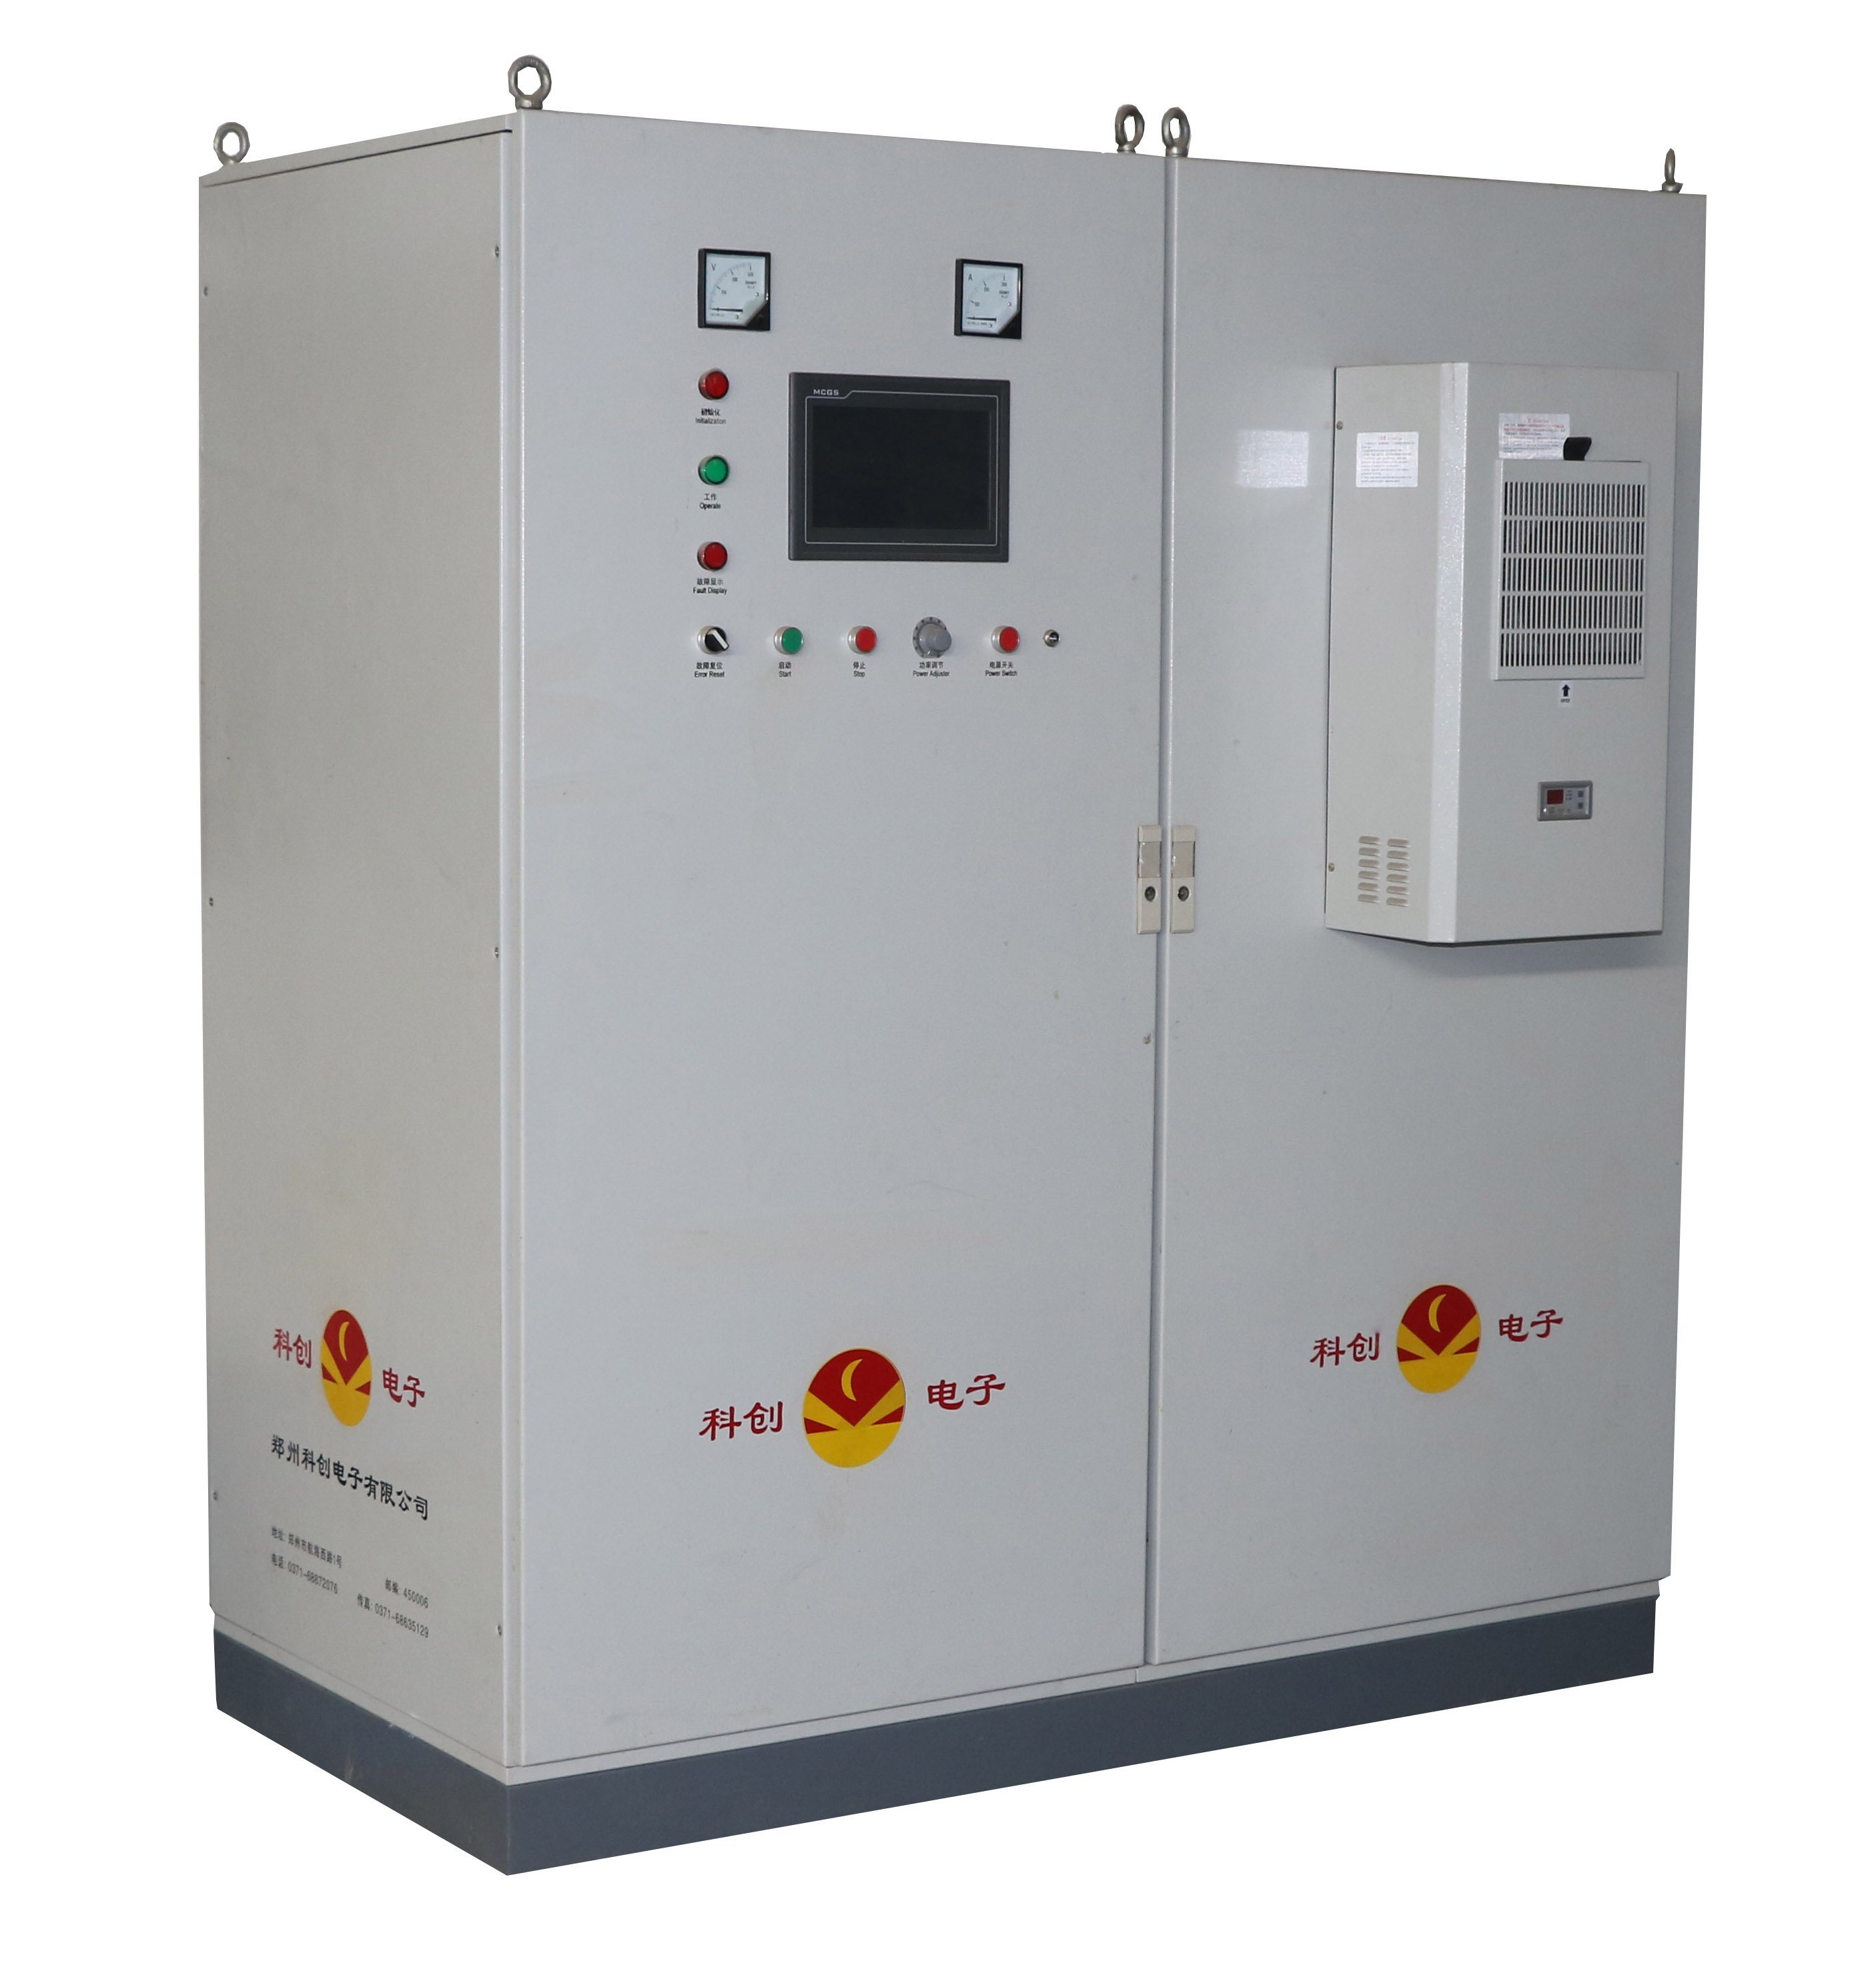 DSP Intelligent Digital Induction Heating Machine for Hardening